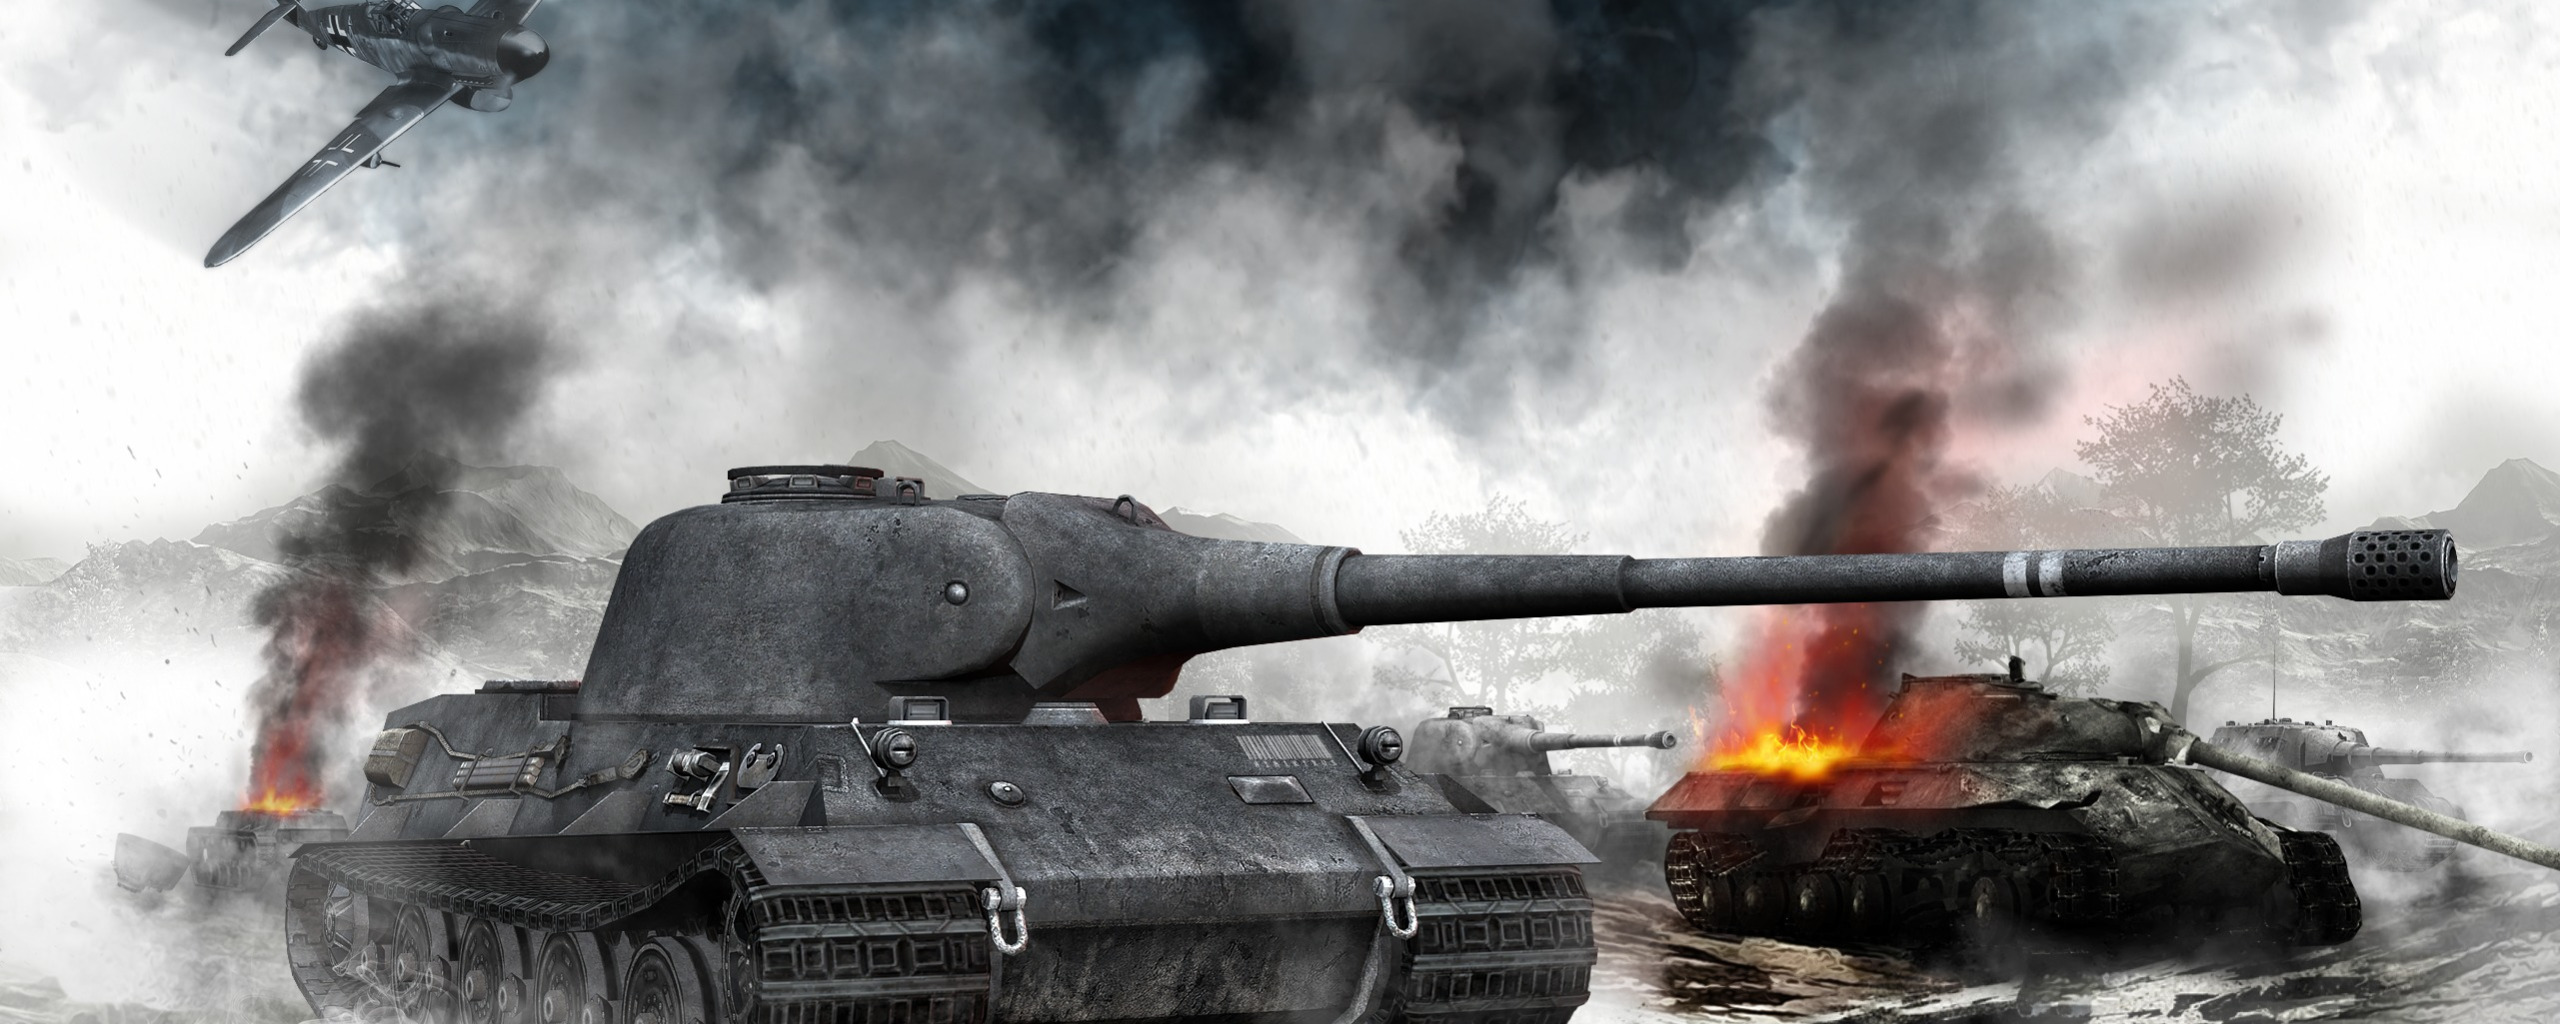 Download Wallpaper Leo Leva Wot World Of Tanks World Of Tanks Lion German Tank Tt Lvl 8 Section Games In Resolution 2560x1024